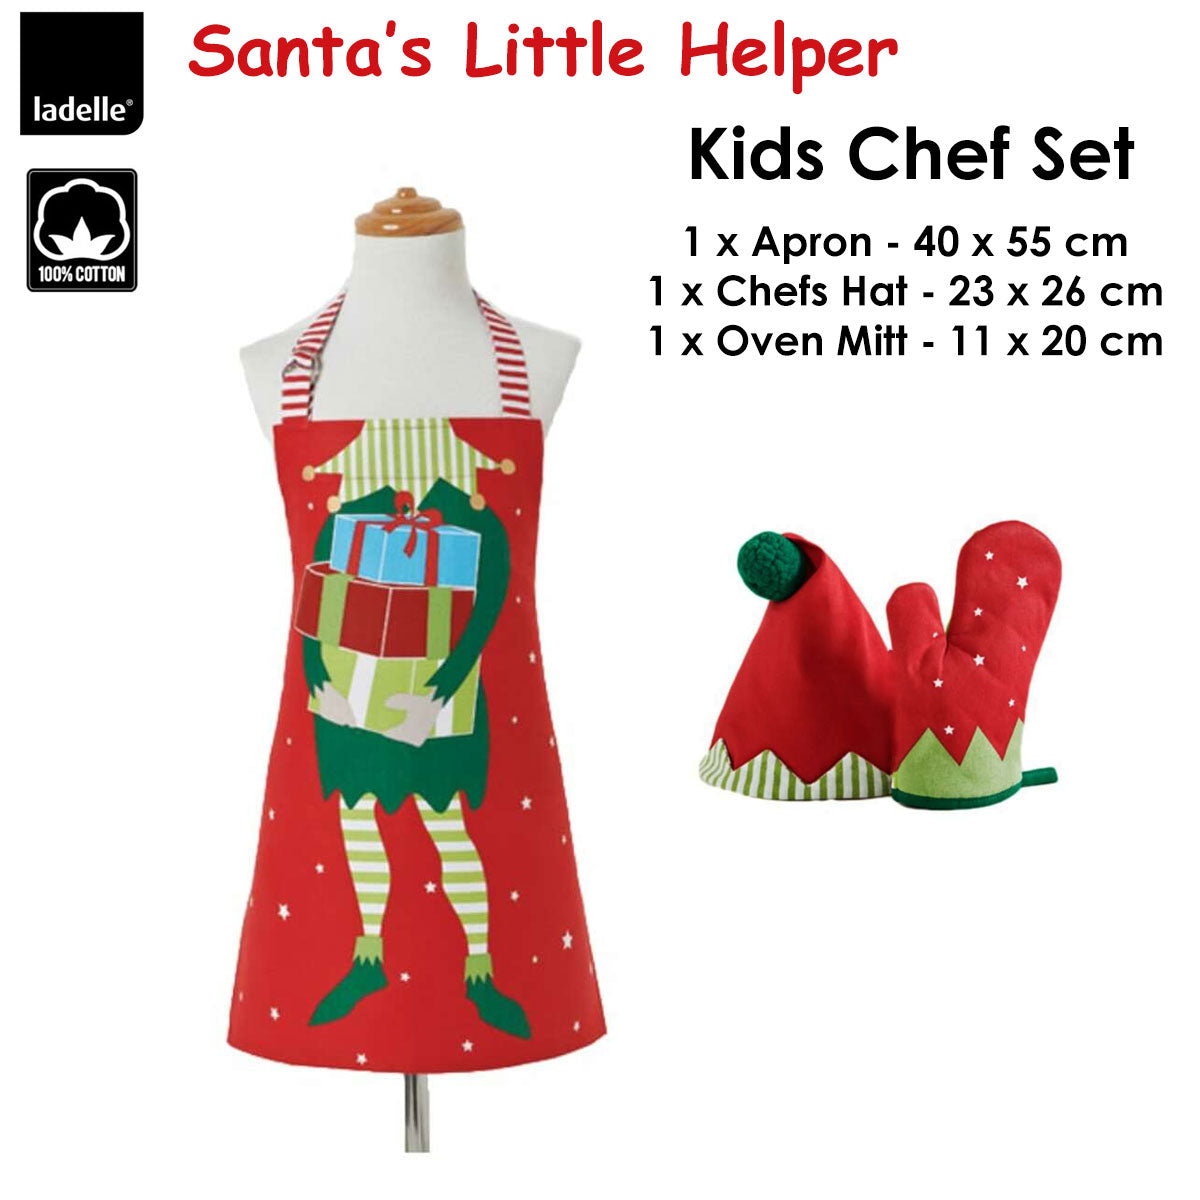 Cubby House Kids Santa's Little Helper Kids Chef Set